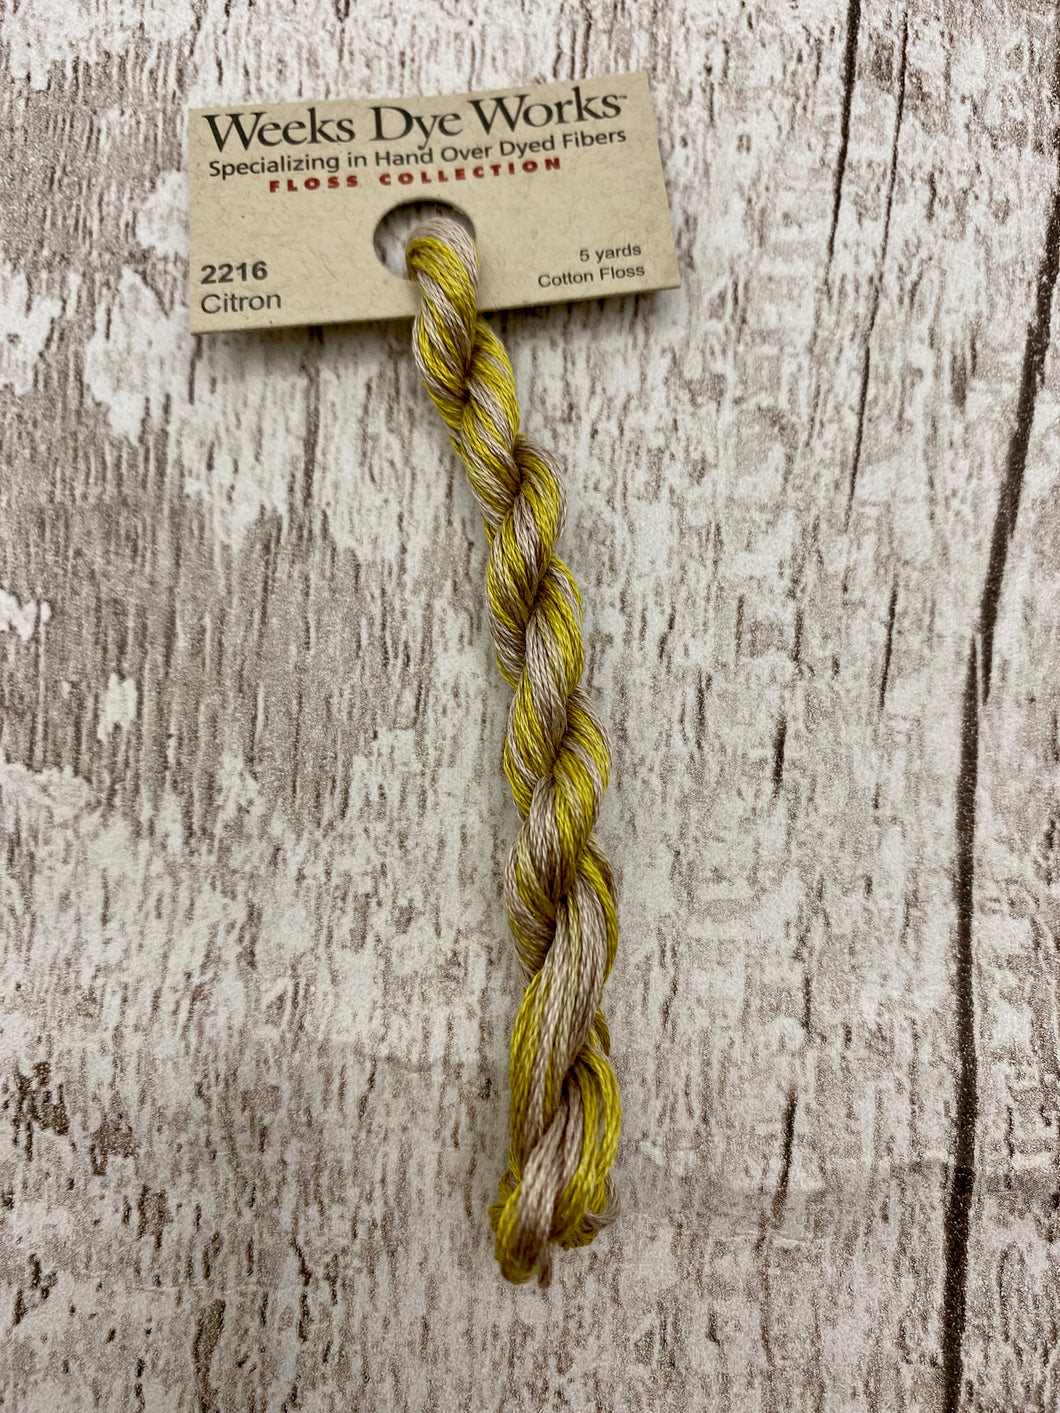 Citron (#2216) Weeks Dye Works, 6-strand cotton floss